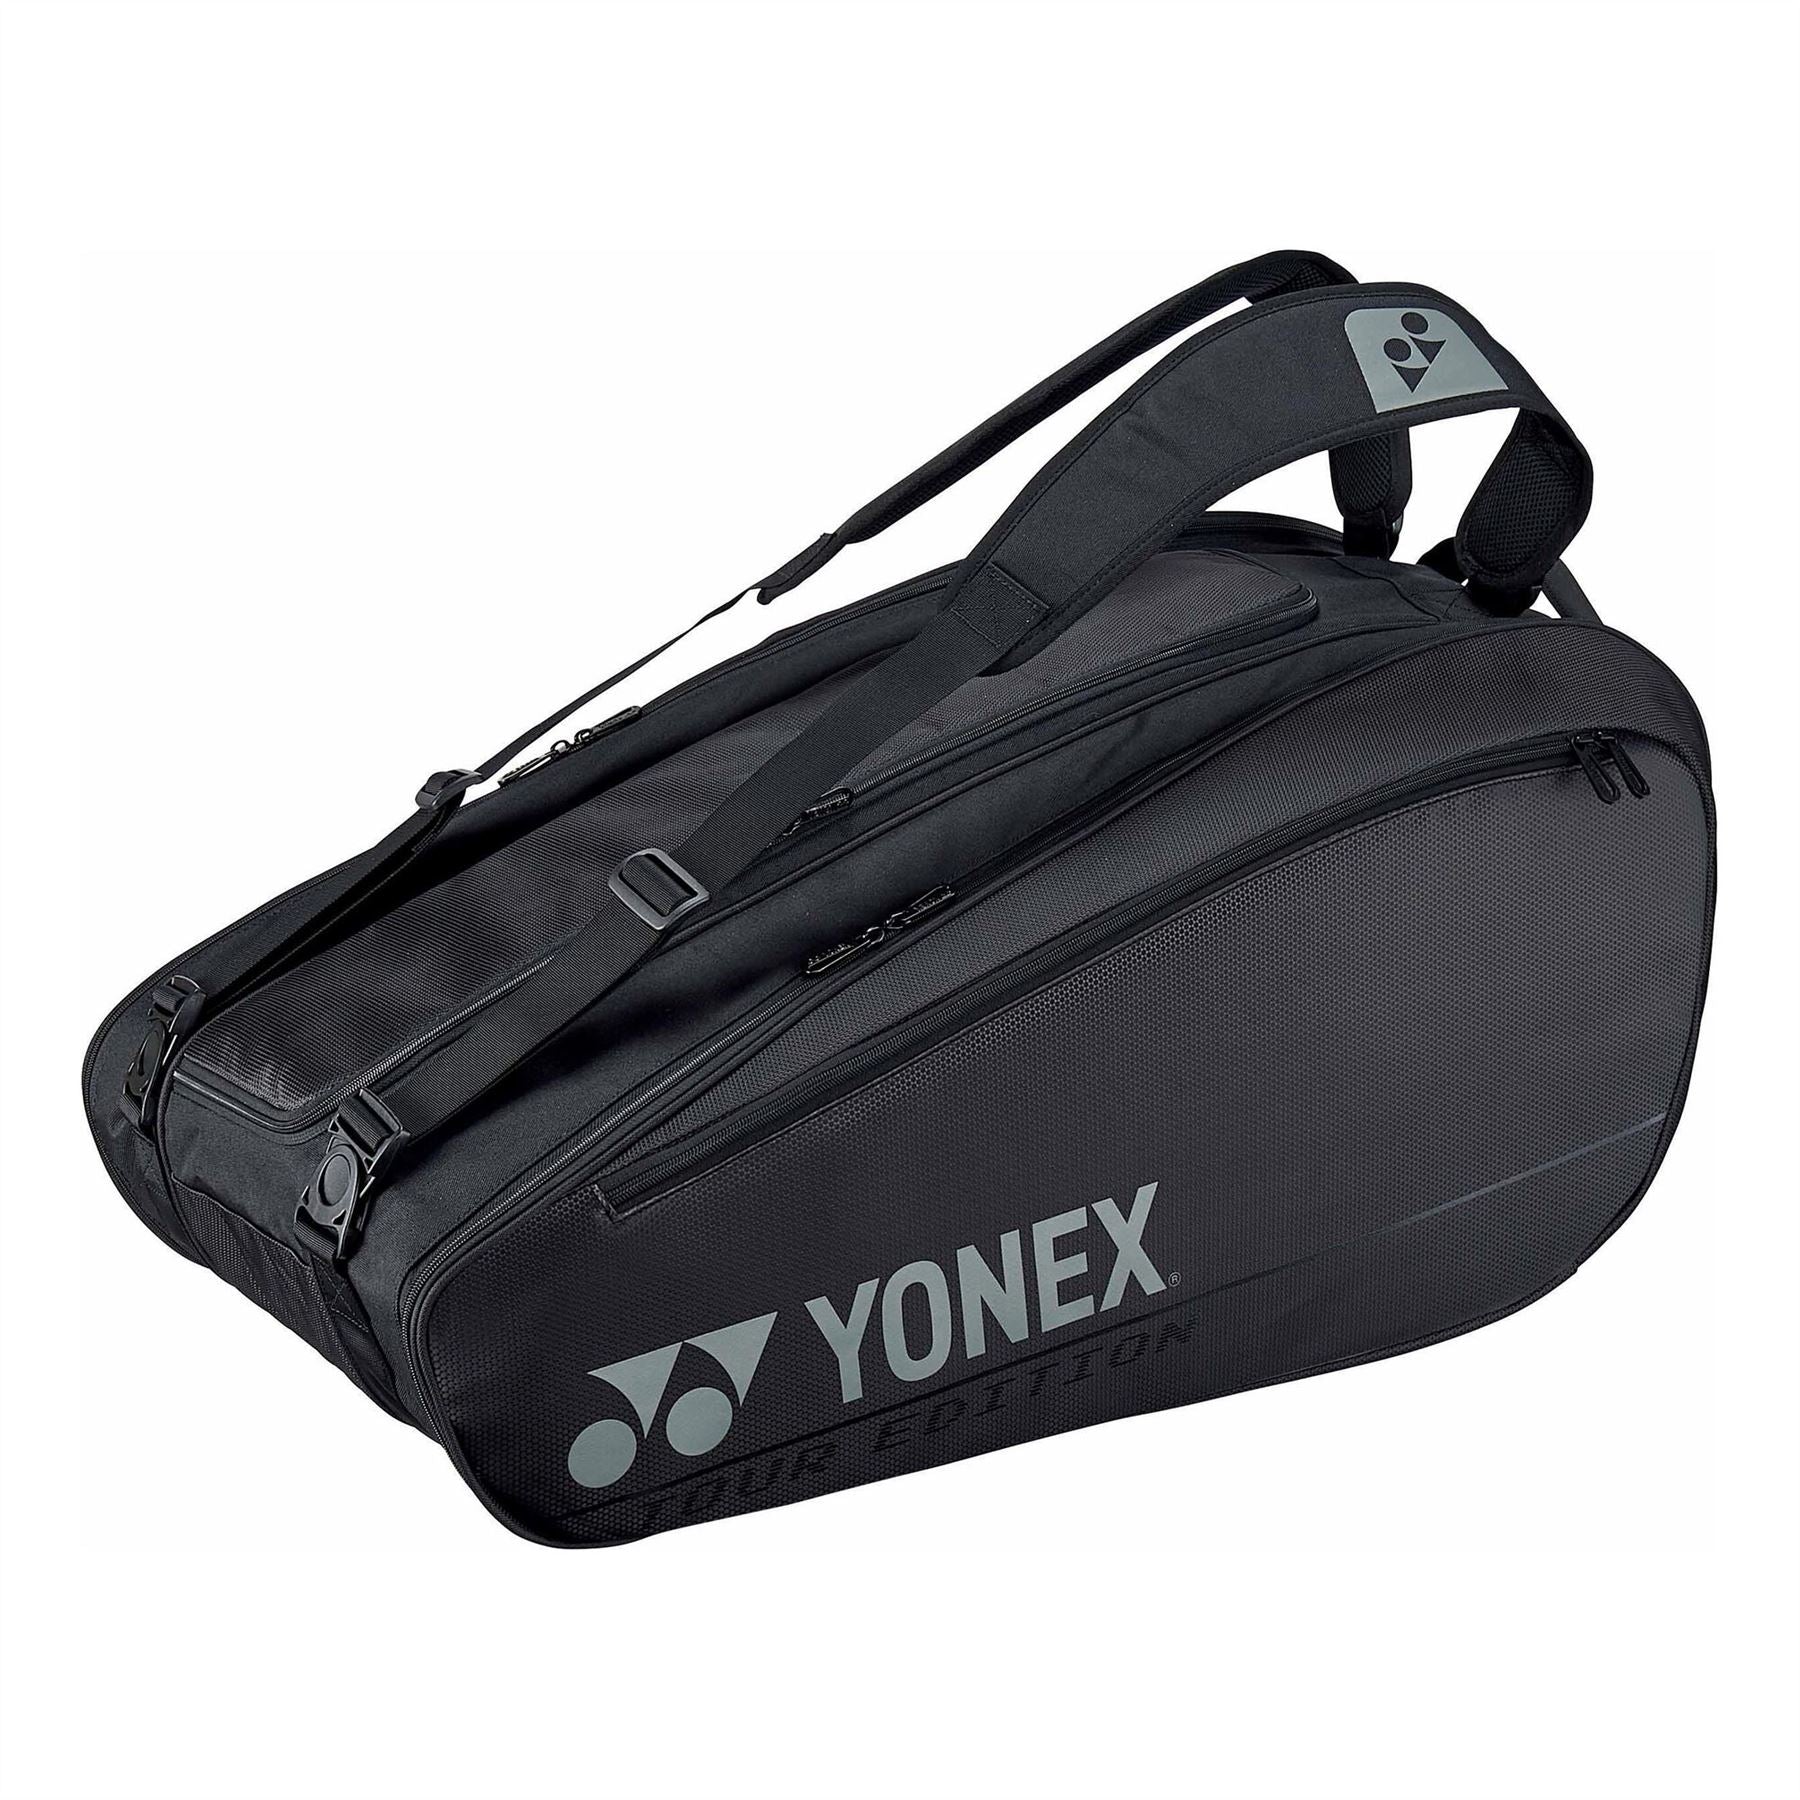 Yonex 92029EX Pro 9 Piece Badminton Racket Bag - Black